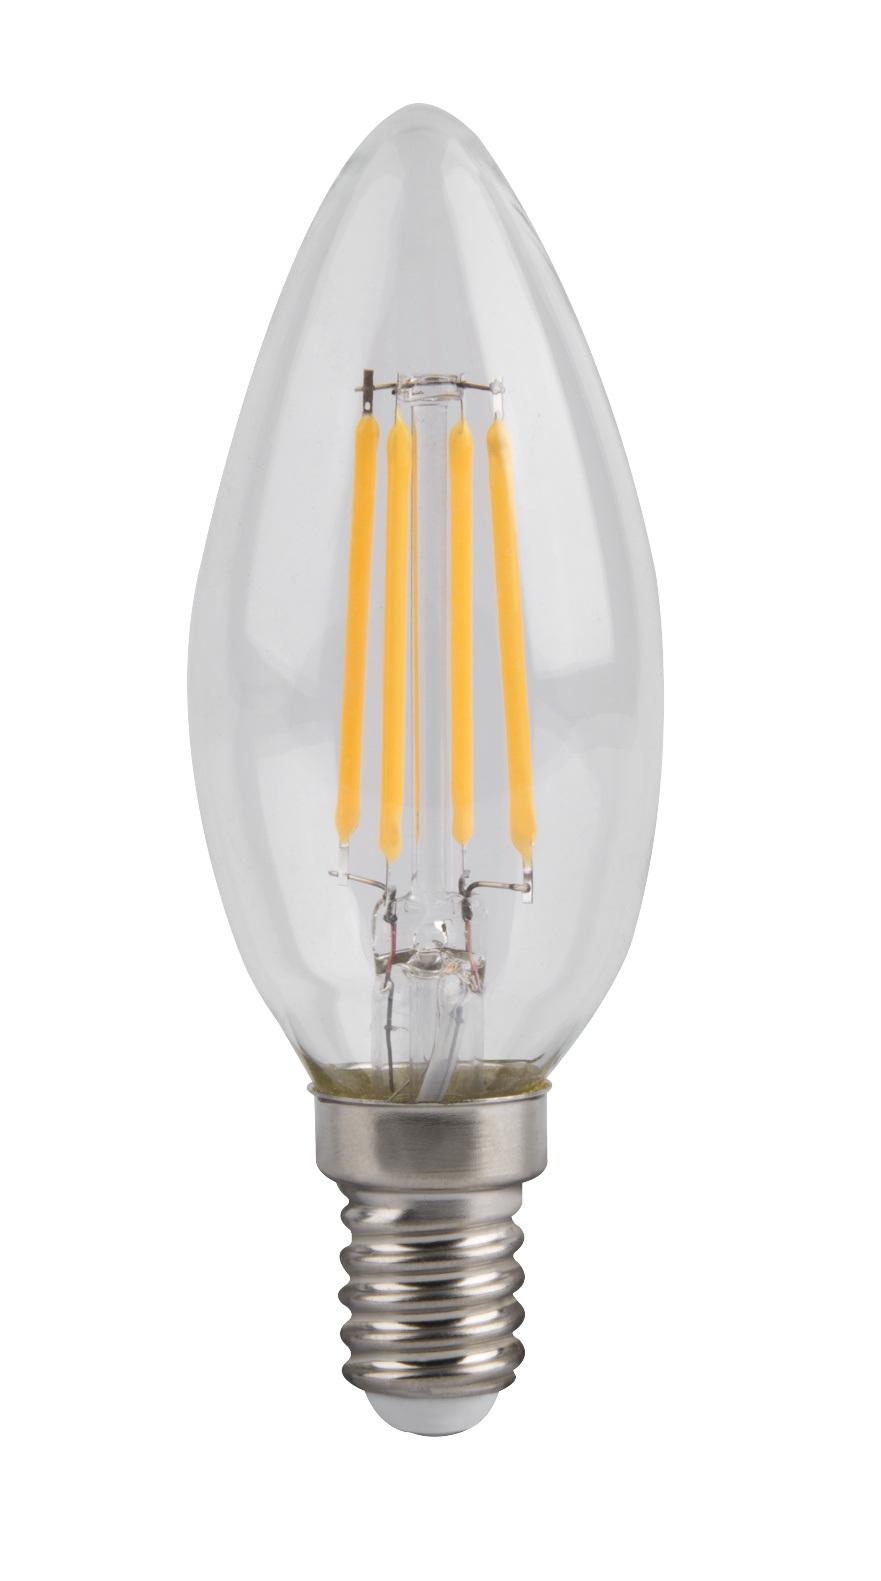 2W 3W 5W 7W E14 LED Flicker Flame Candle Light Bulbs